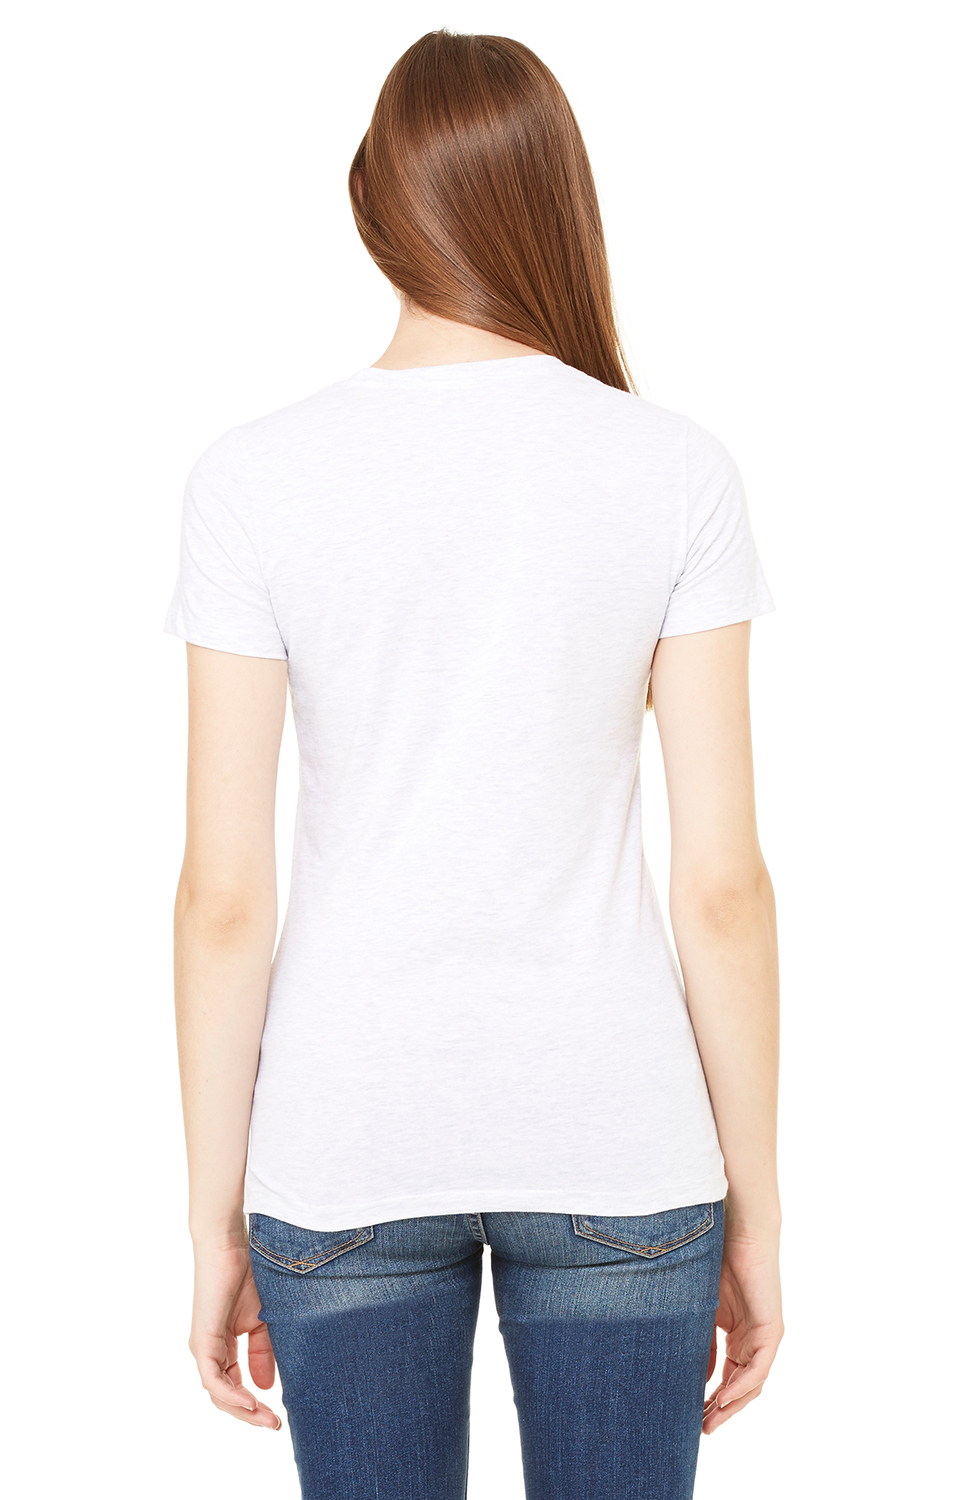 CANVAS Ladies' Junior Fit Favorite T-Shirt Soft Feel S-XL BELLA 